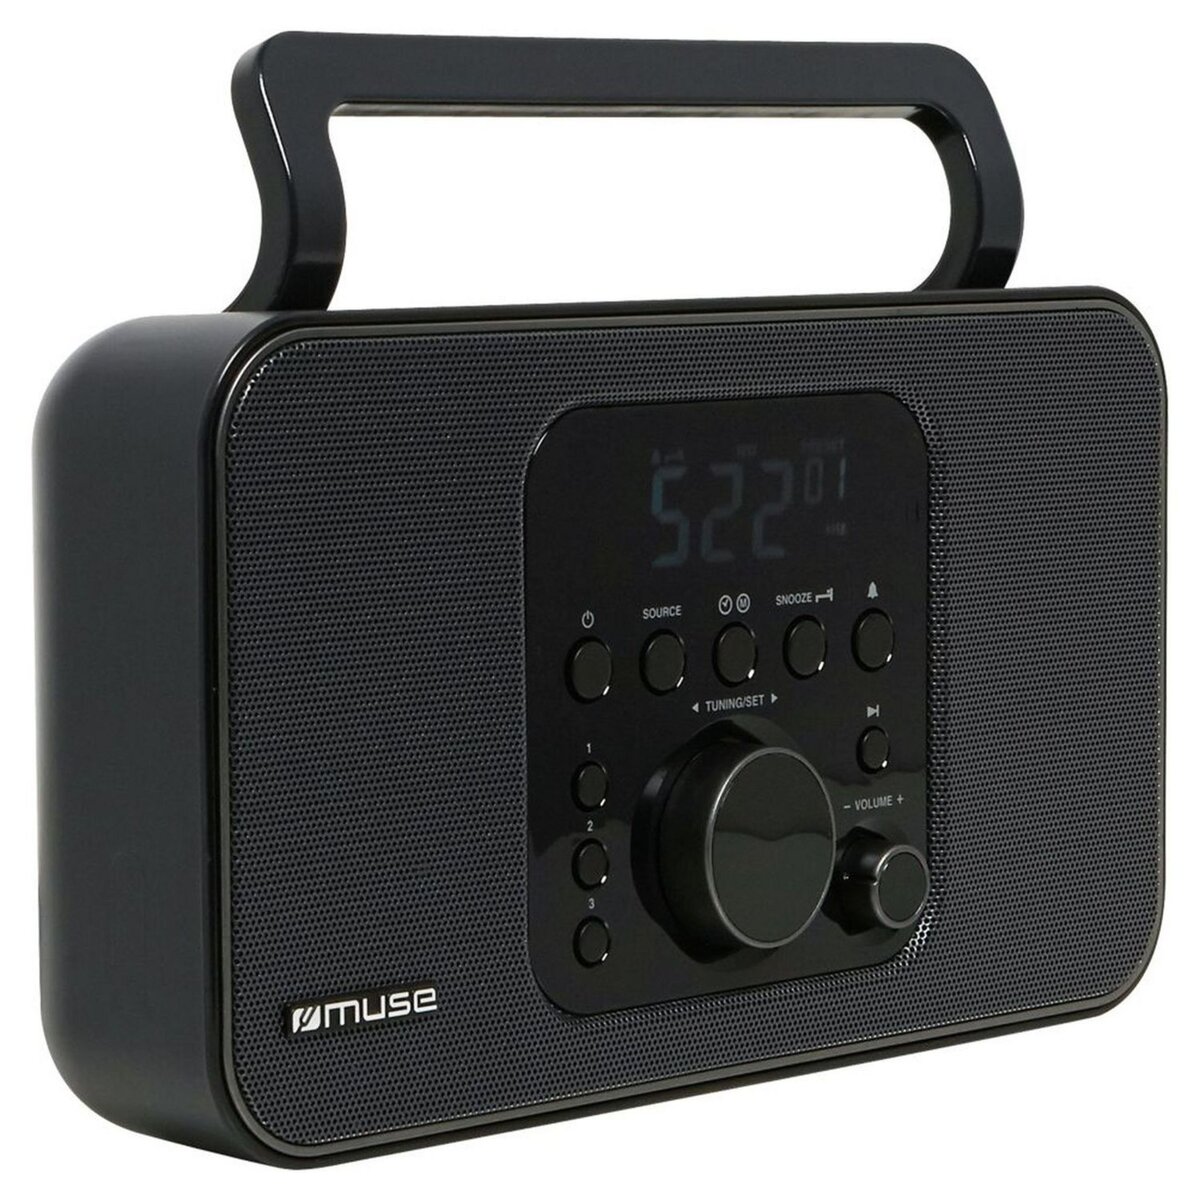 MUSE Radio portable analogique - Noir - M-091R